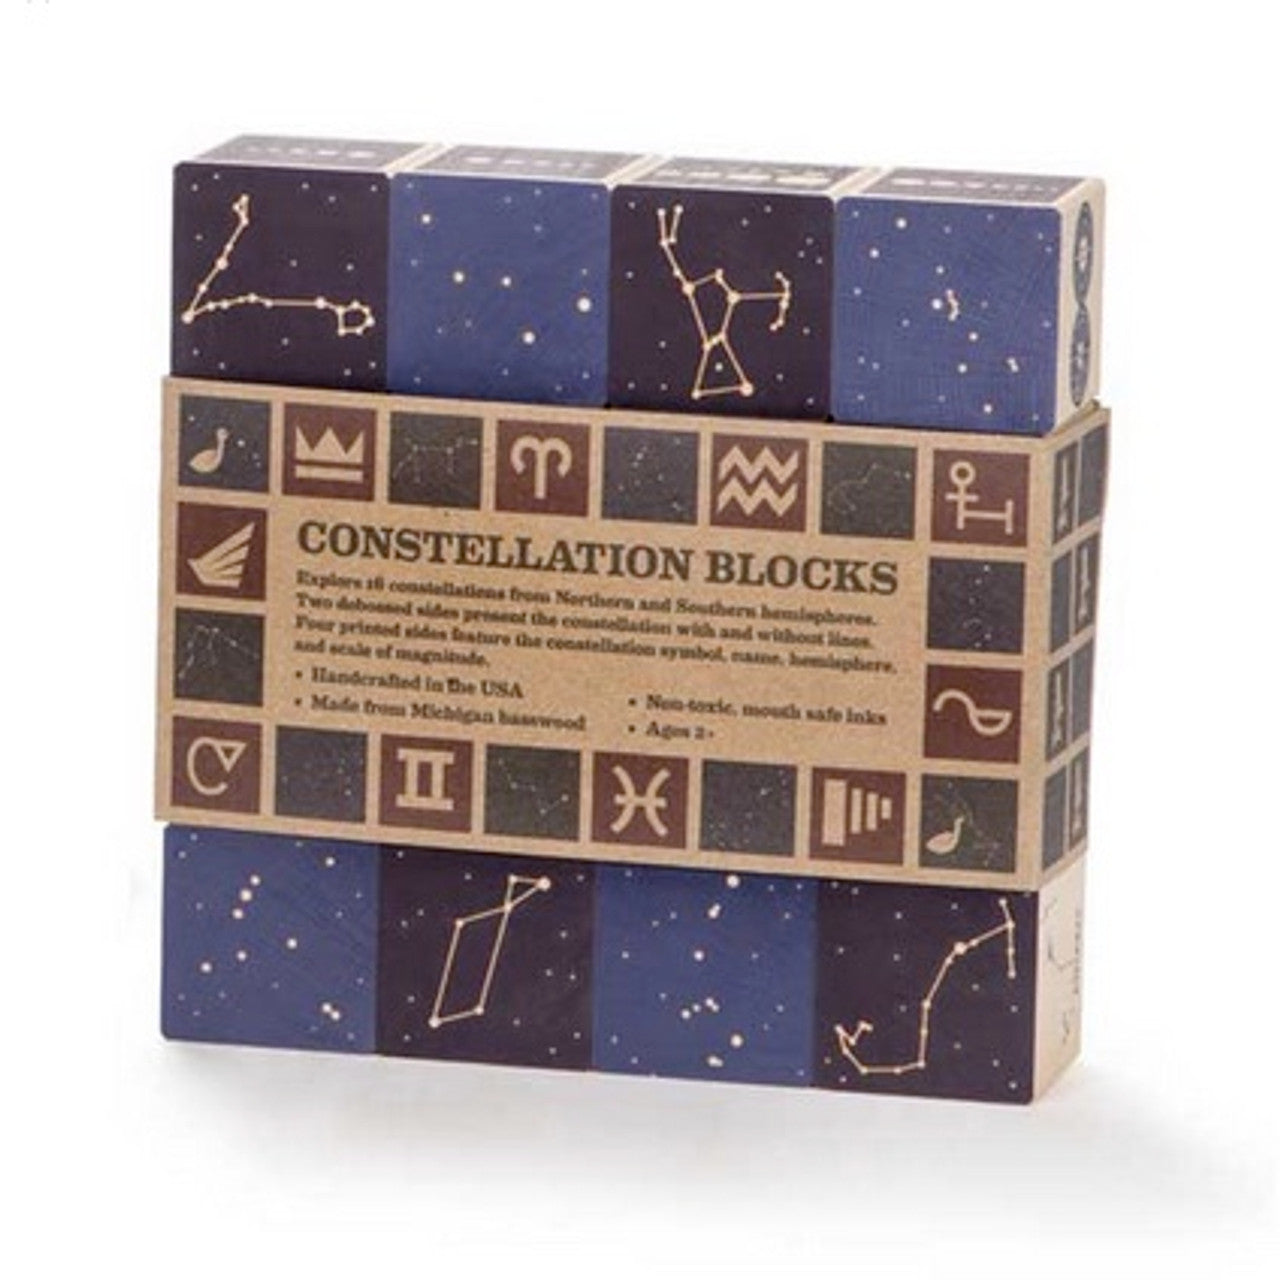 Constellation blocks